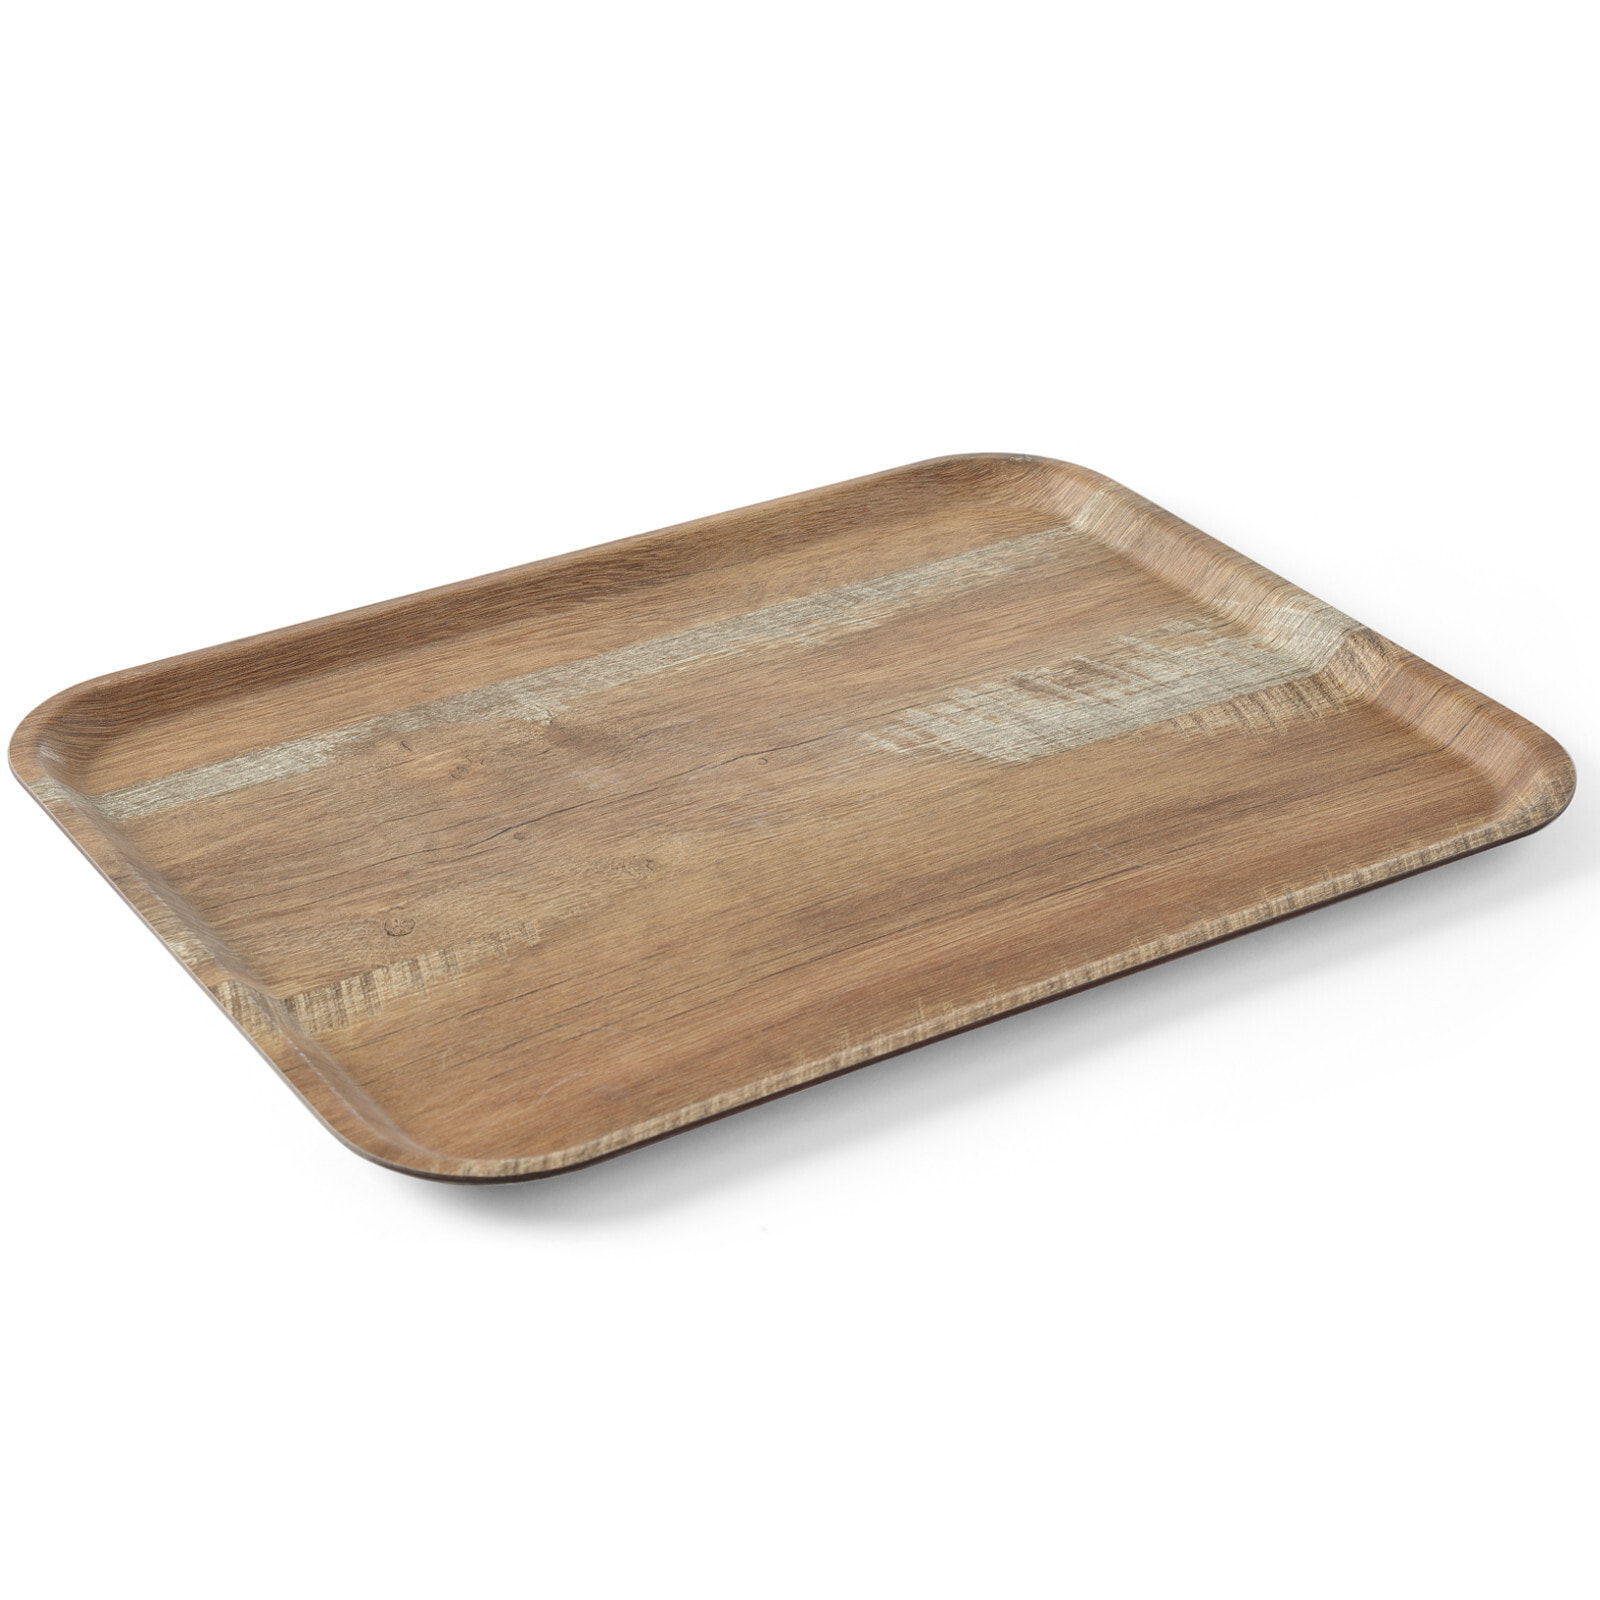 Tray serving tray with wood imprint 370x530mm Hendi 508947 oak